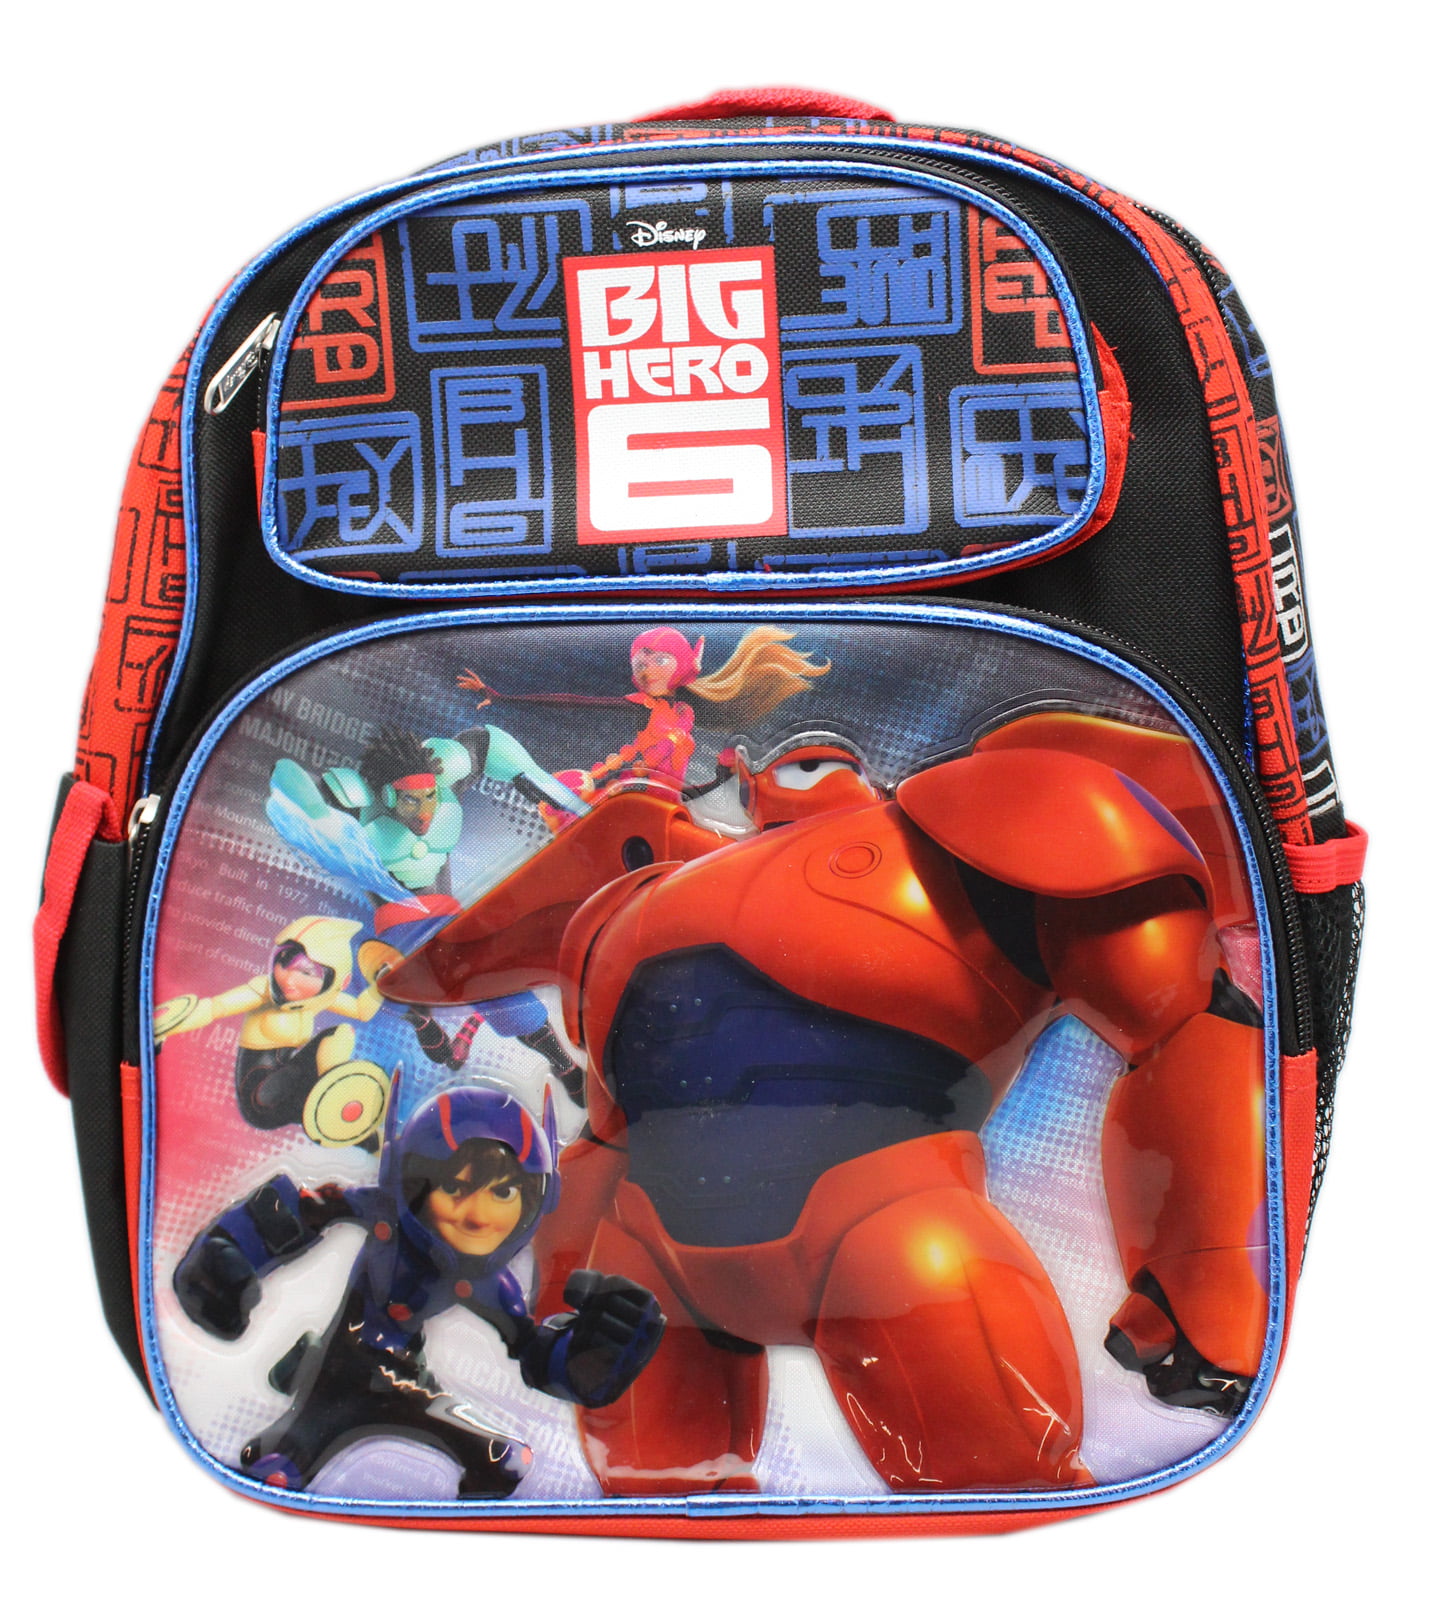 Big Hero 6 BackpackSchool BagKnapsackRucksack For Little Ones Blue 